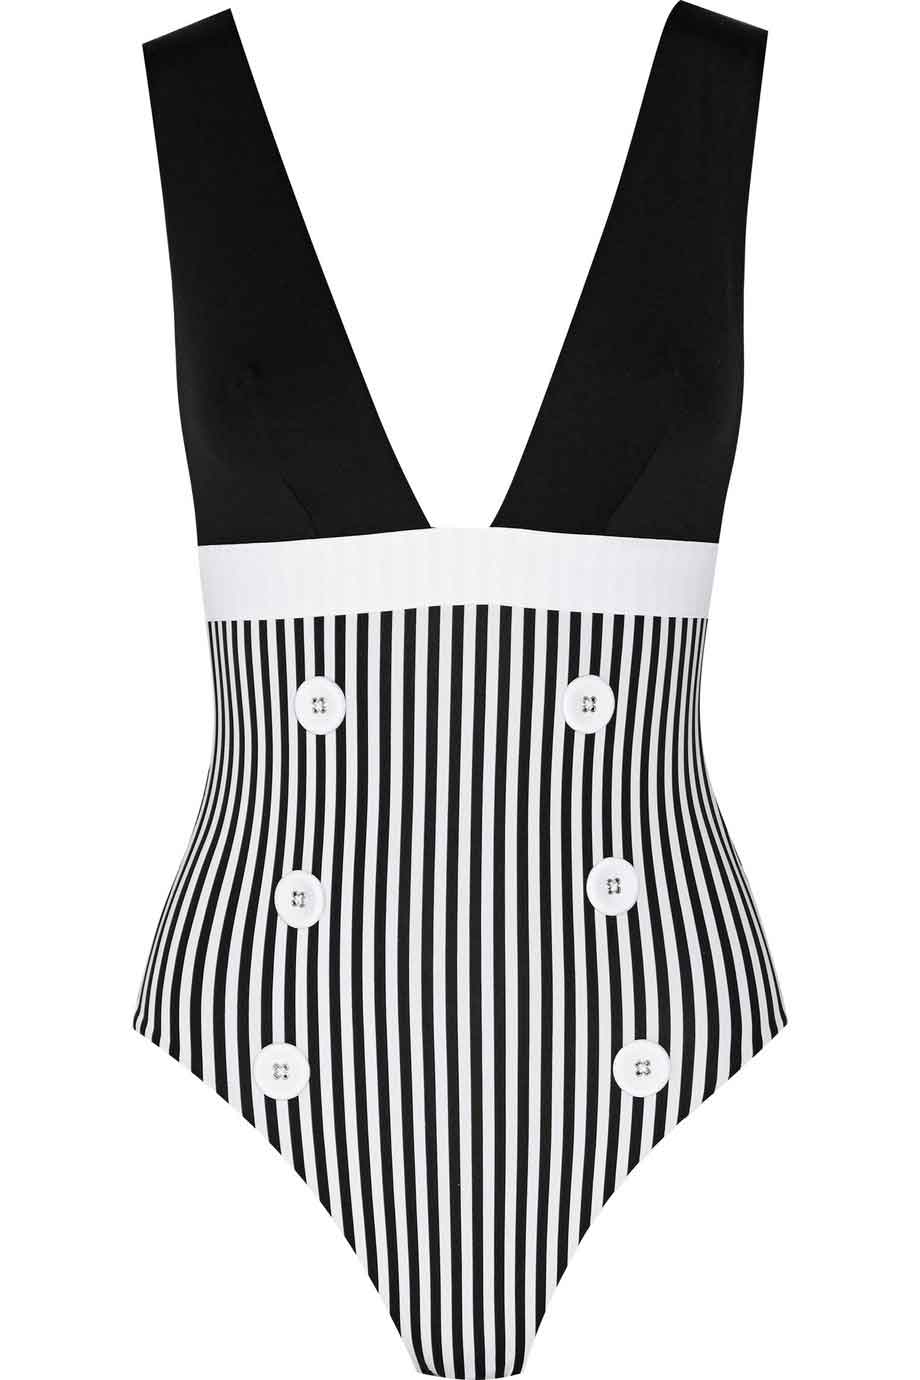 Sailor Stripes swimsuit, £220, La Perla. www.net-a-porter.com 